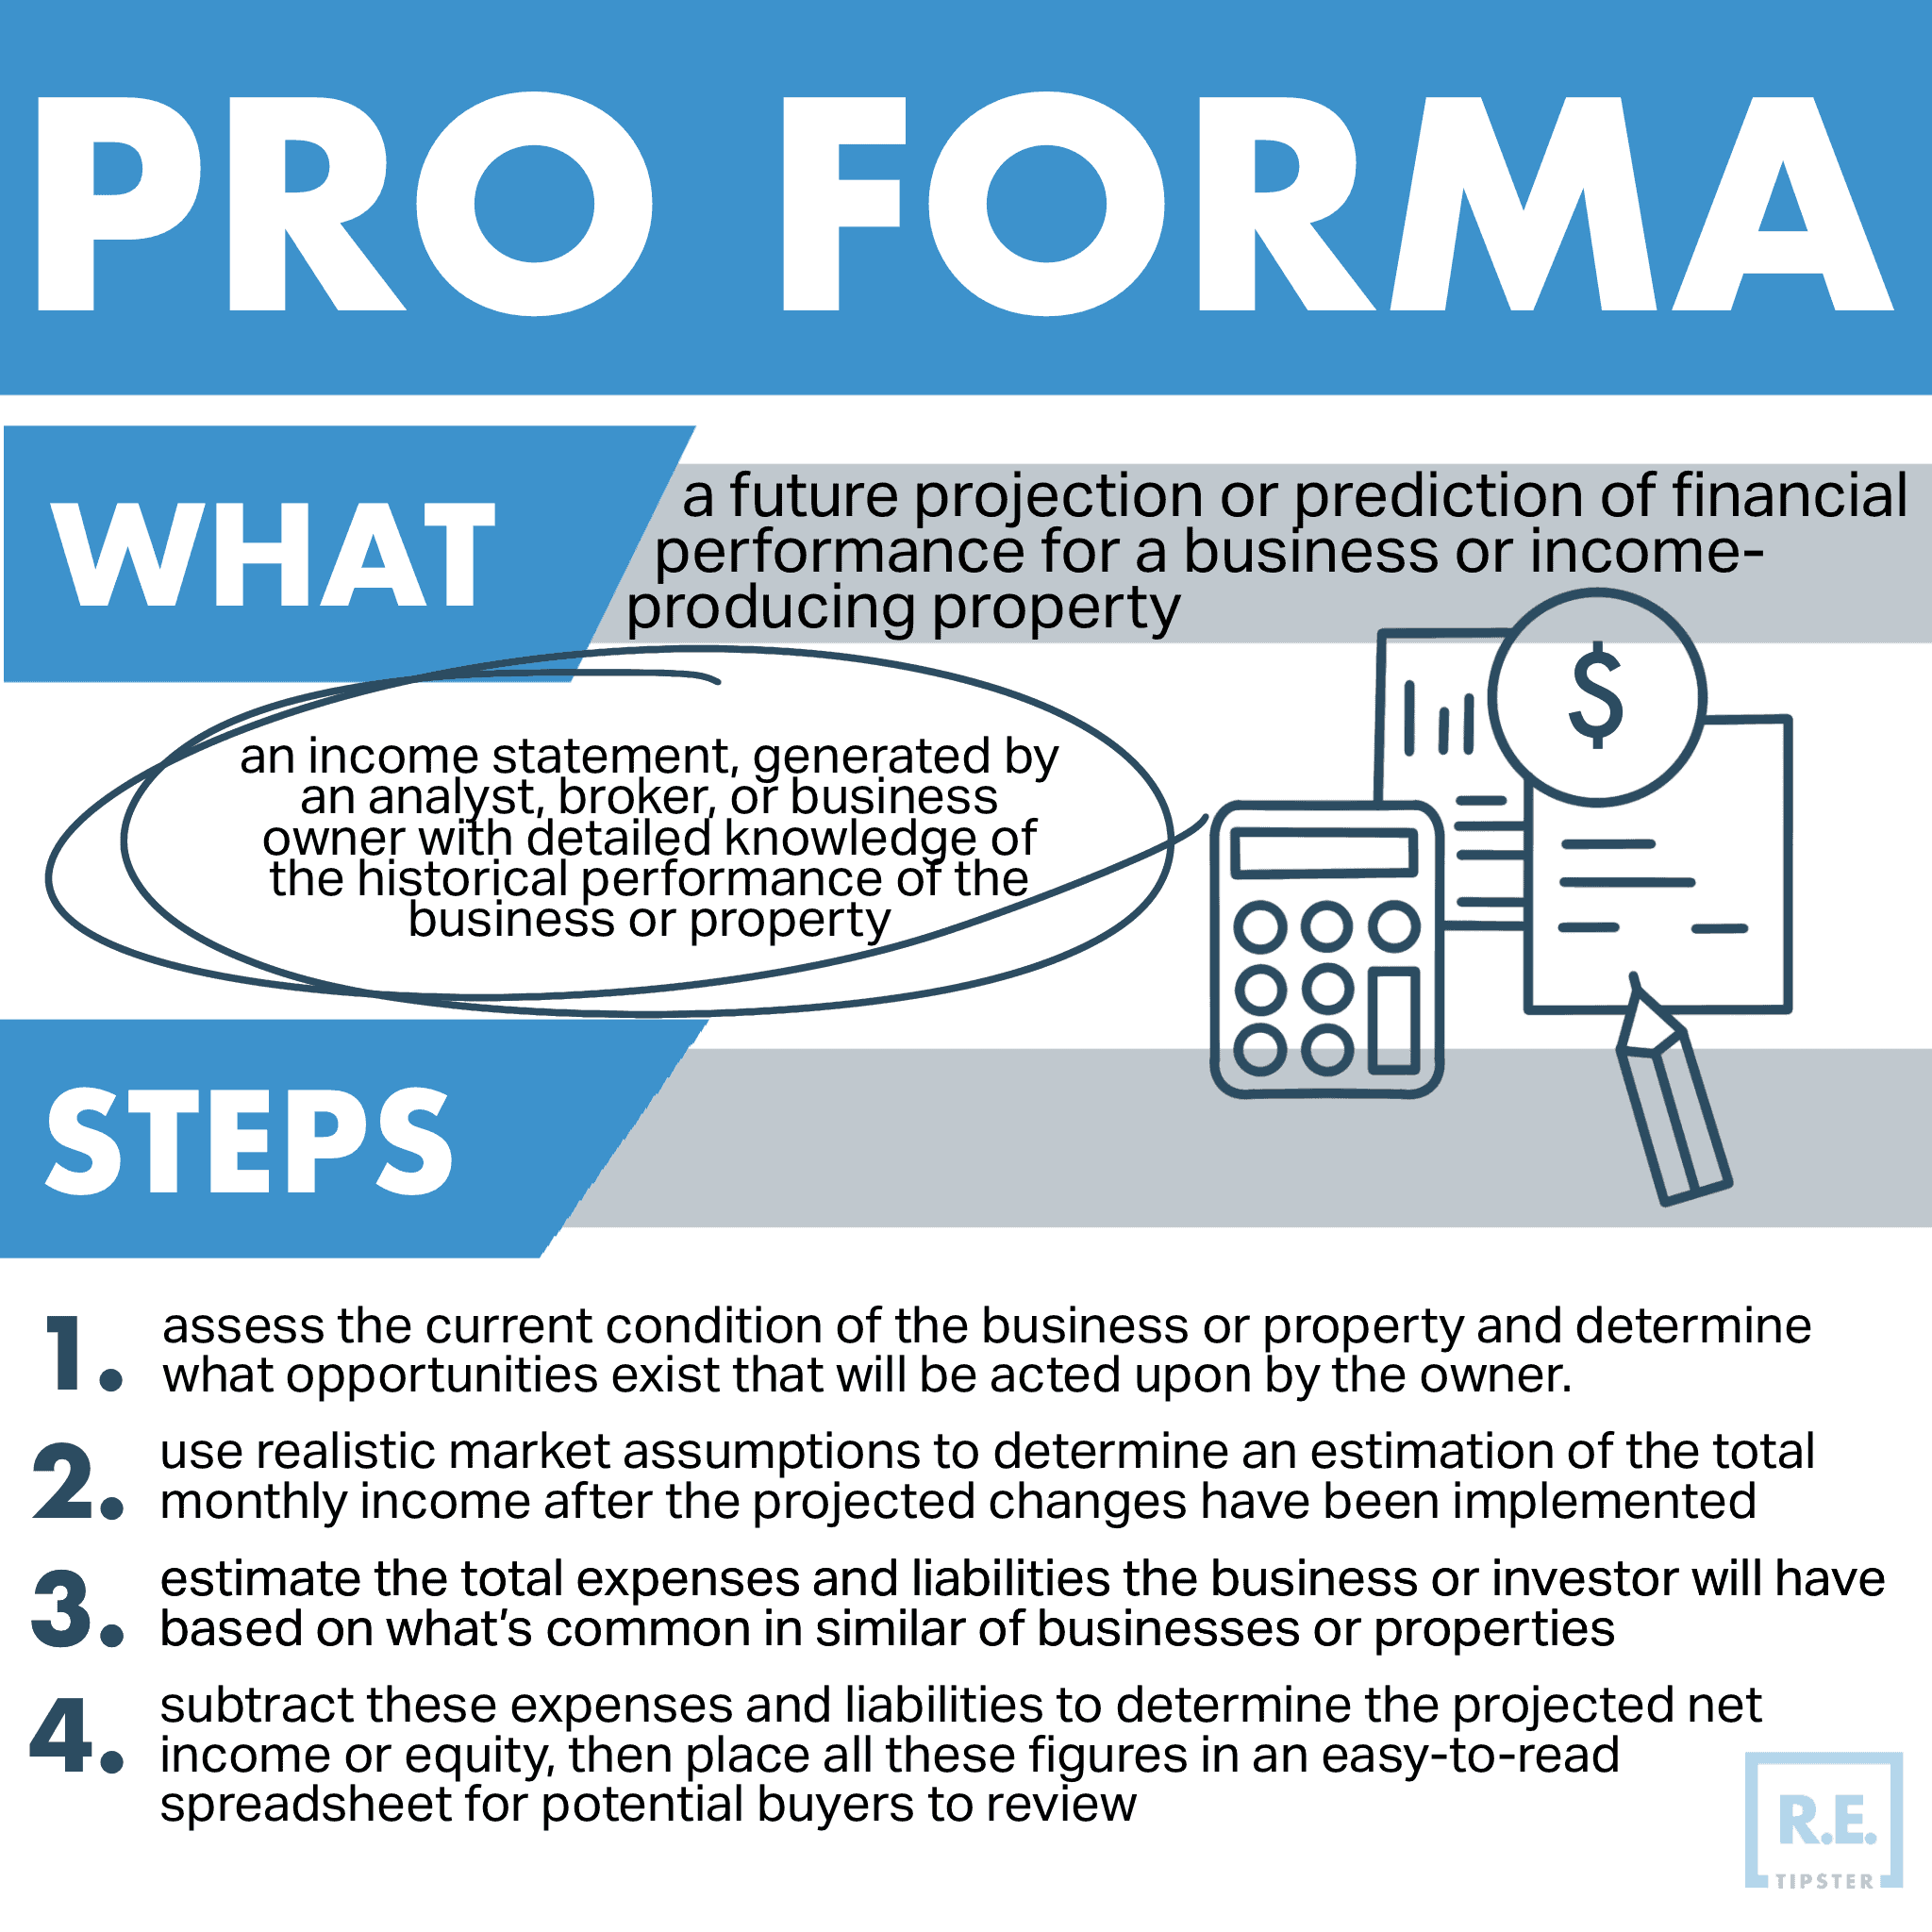 Pro Forma Infographic